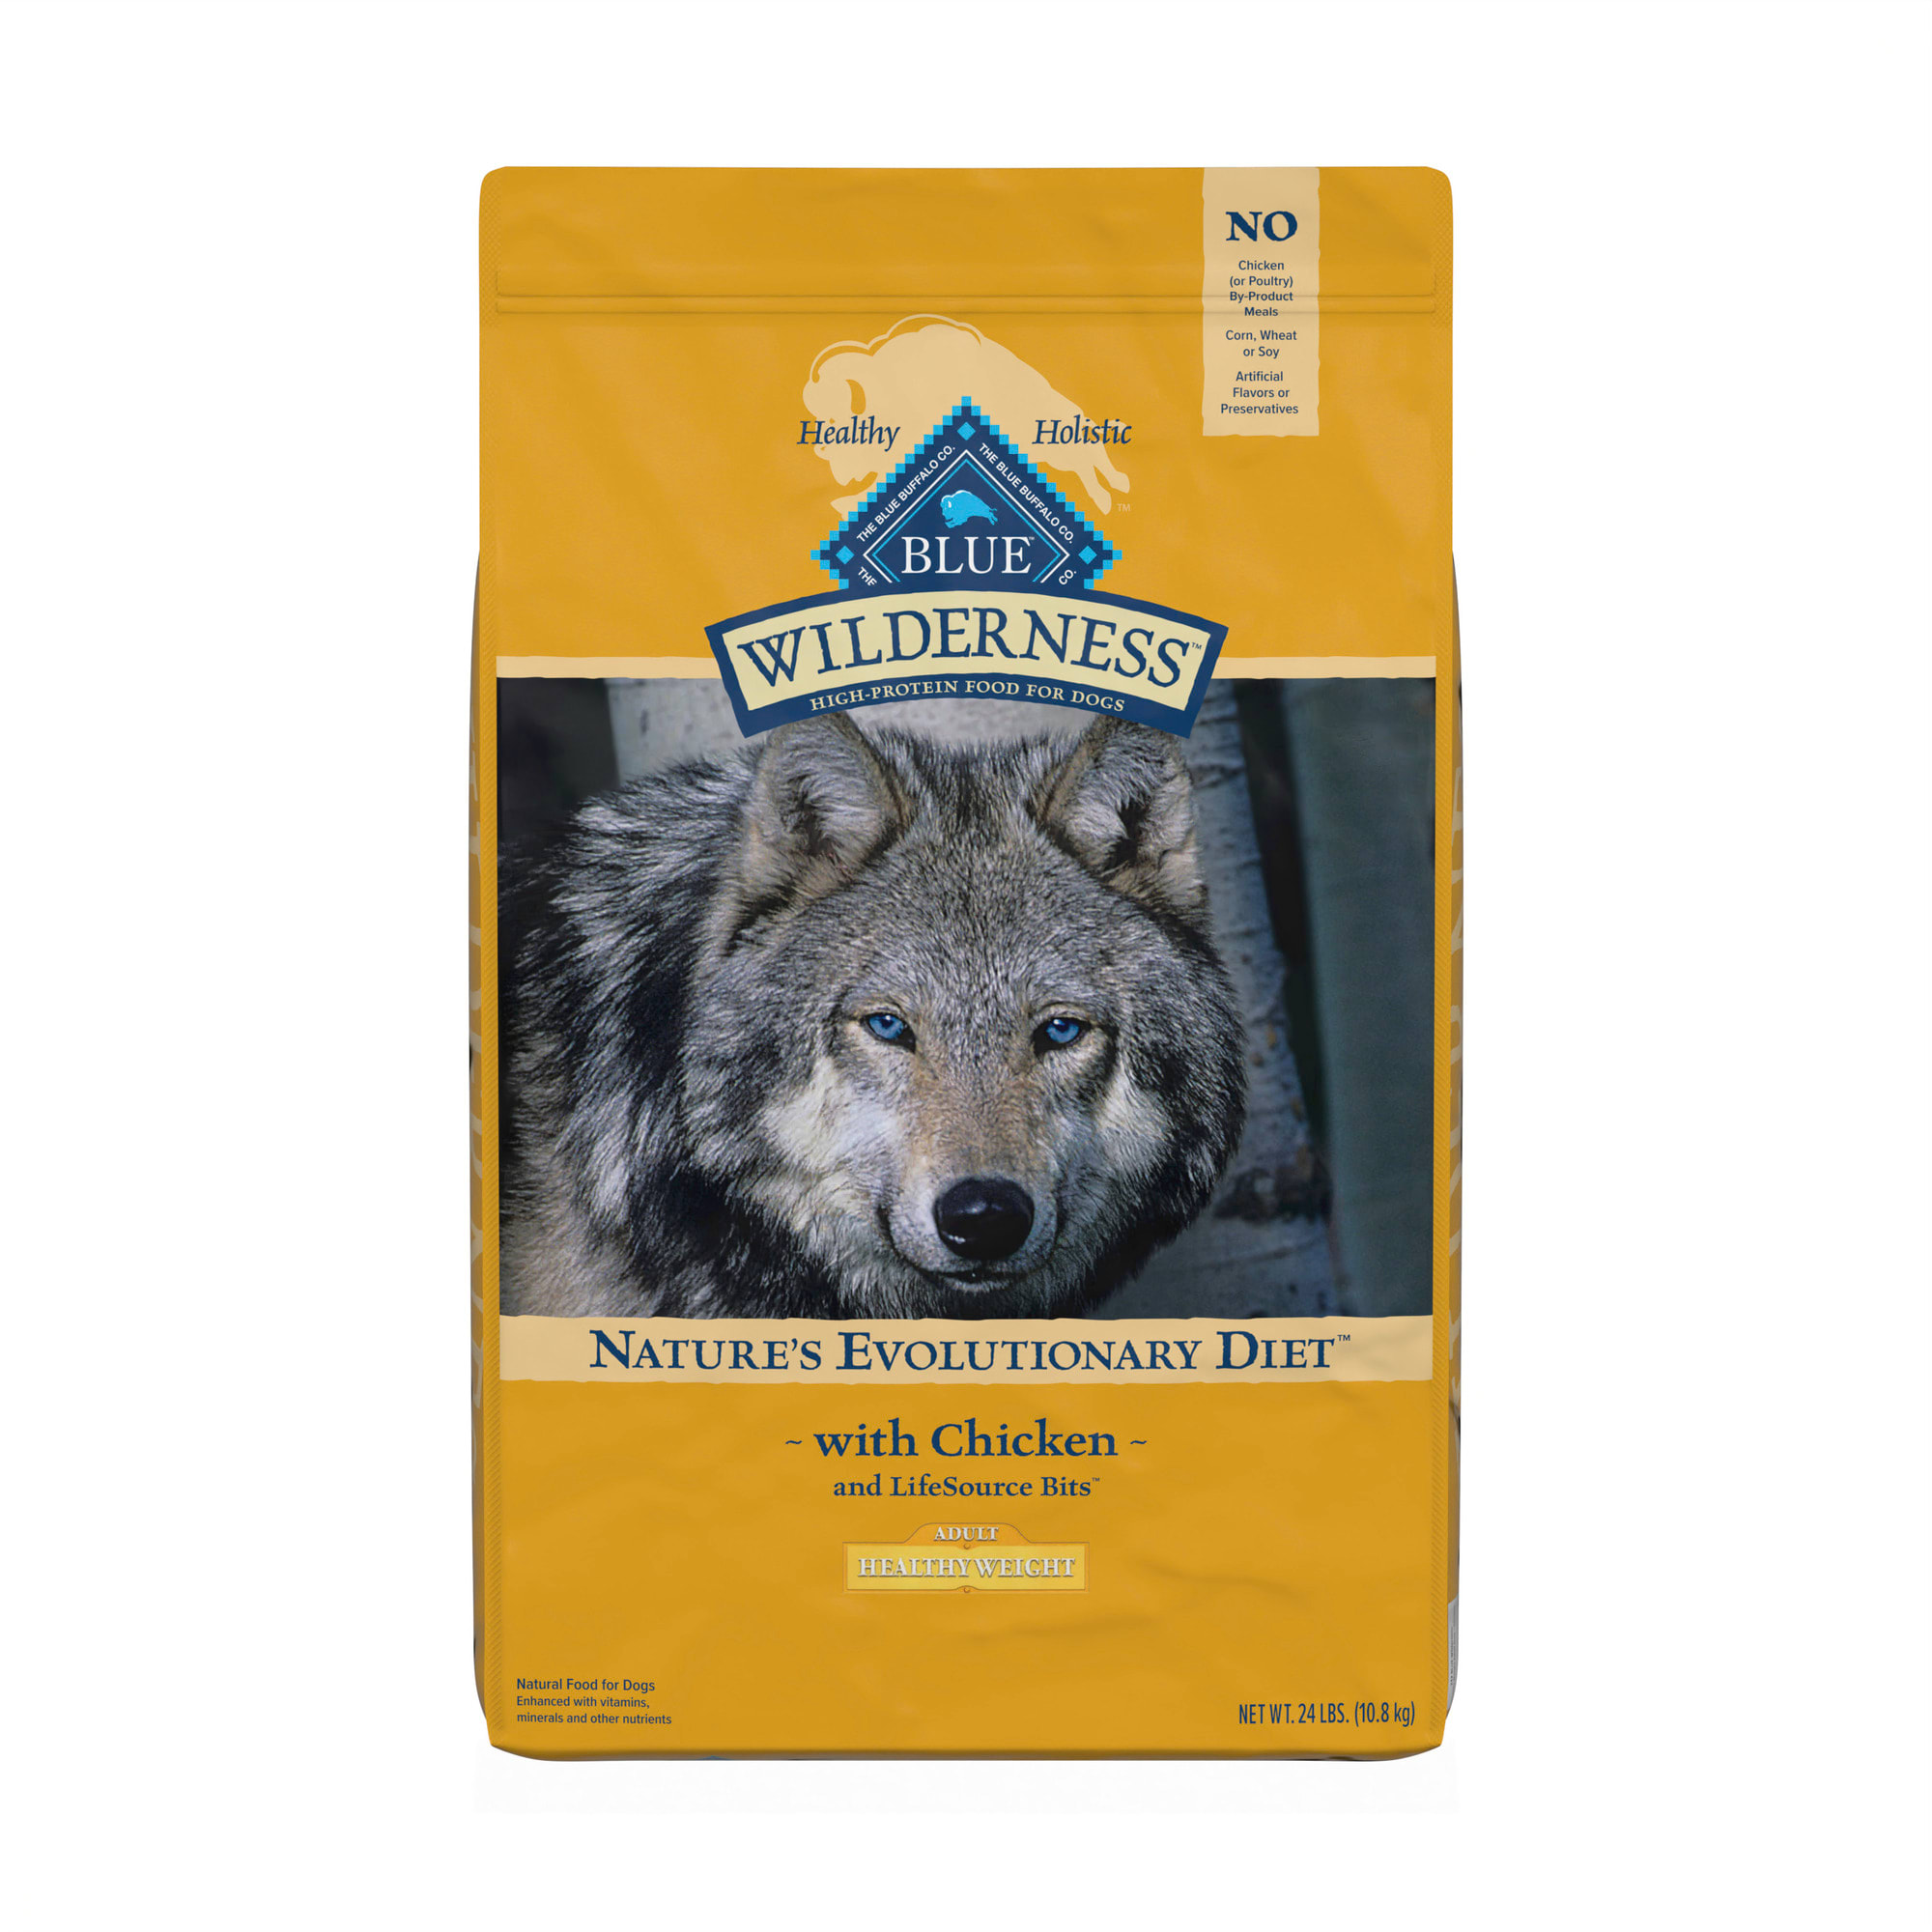 what is a wolf grain diet